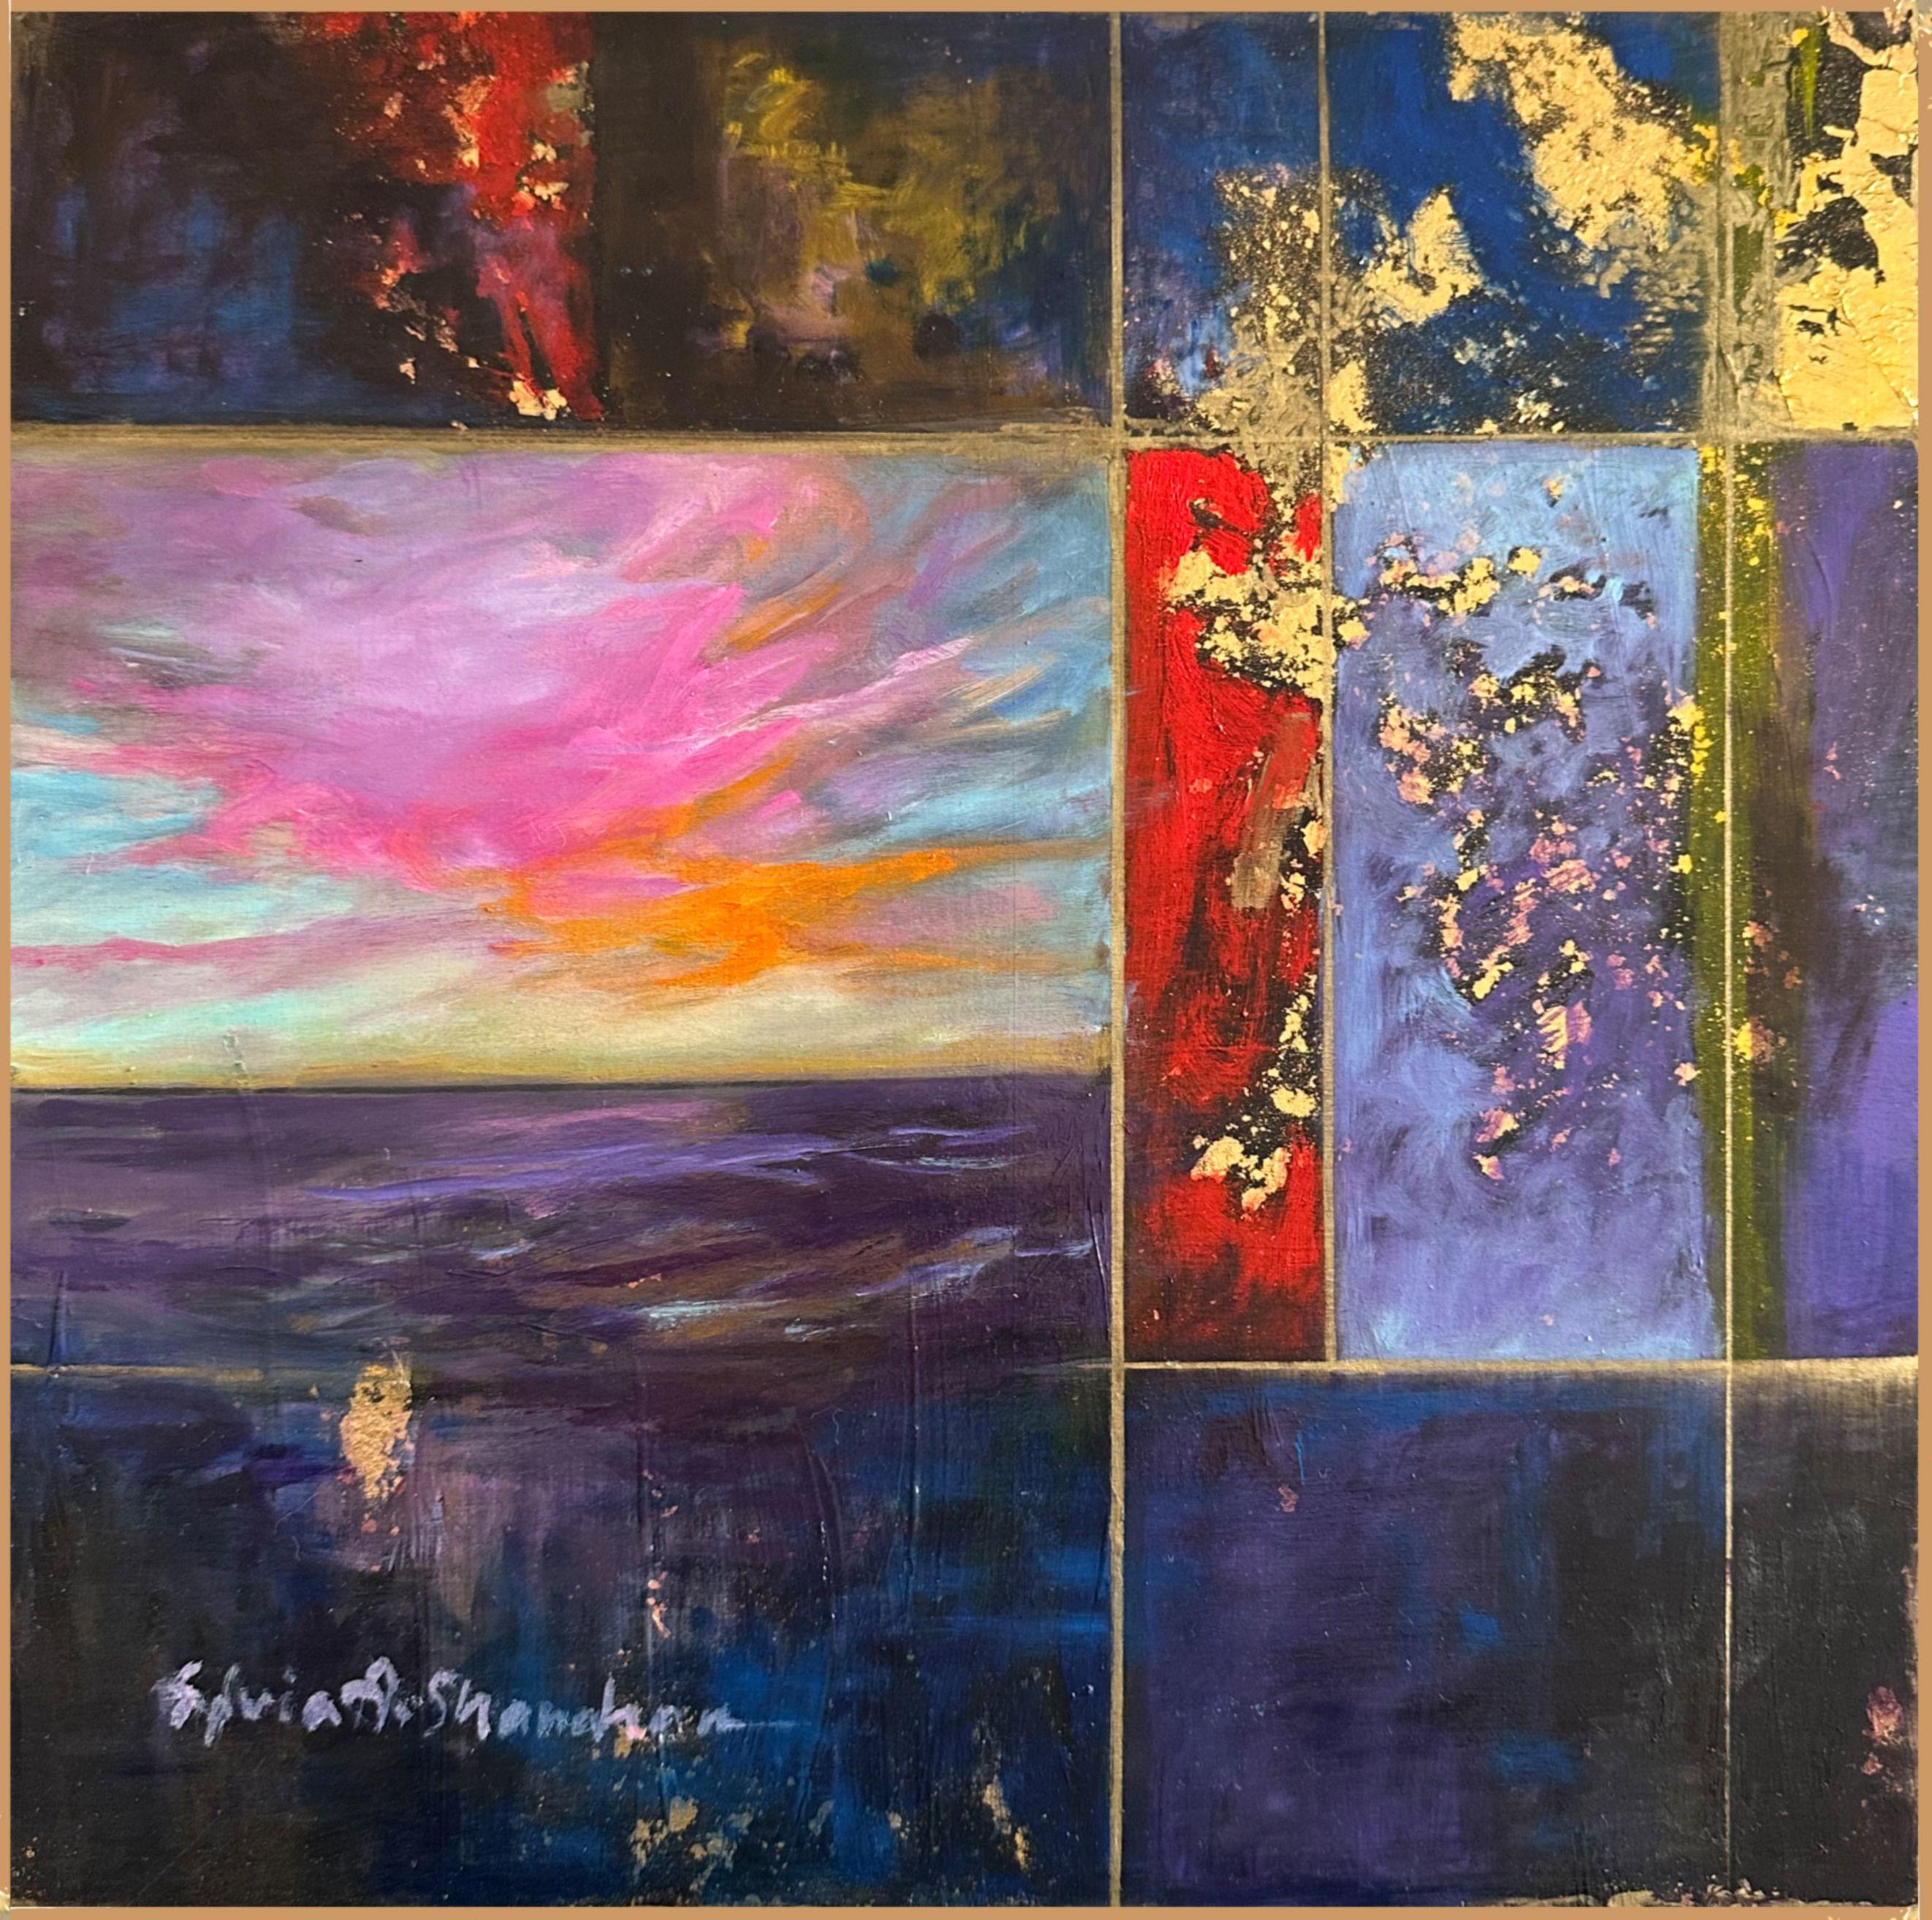 Gilded Sunset, Mixed Media on Wood Panel - Mixed Media Art by Sylvia Shanahan